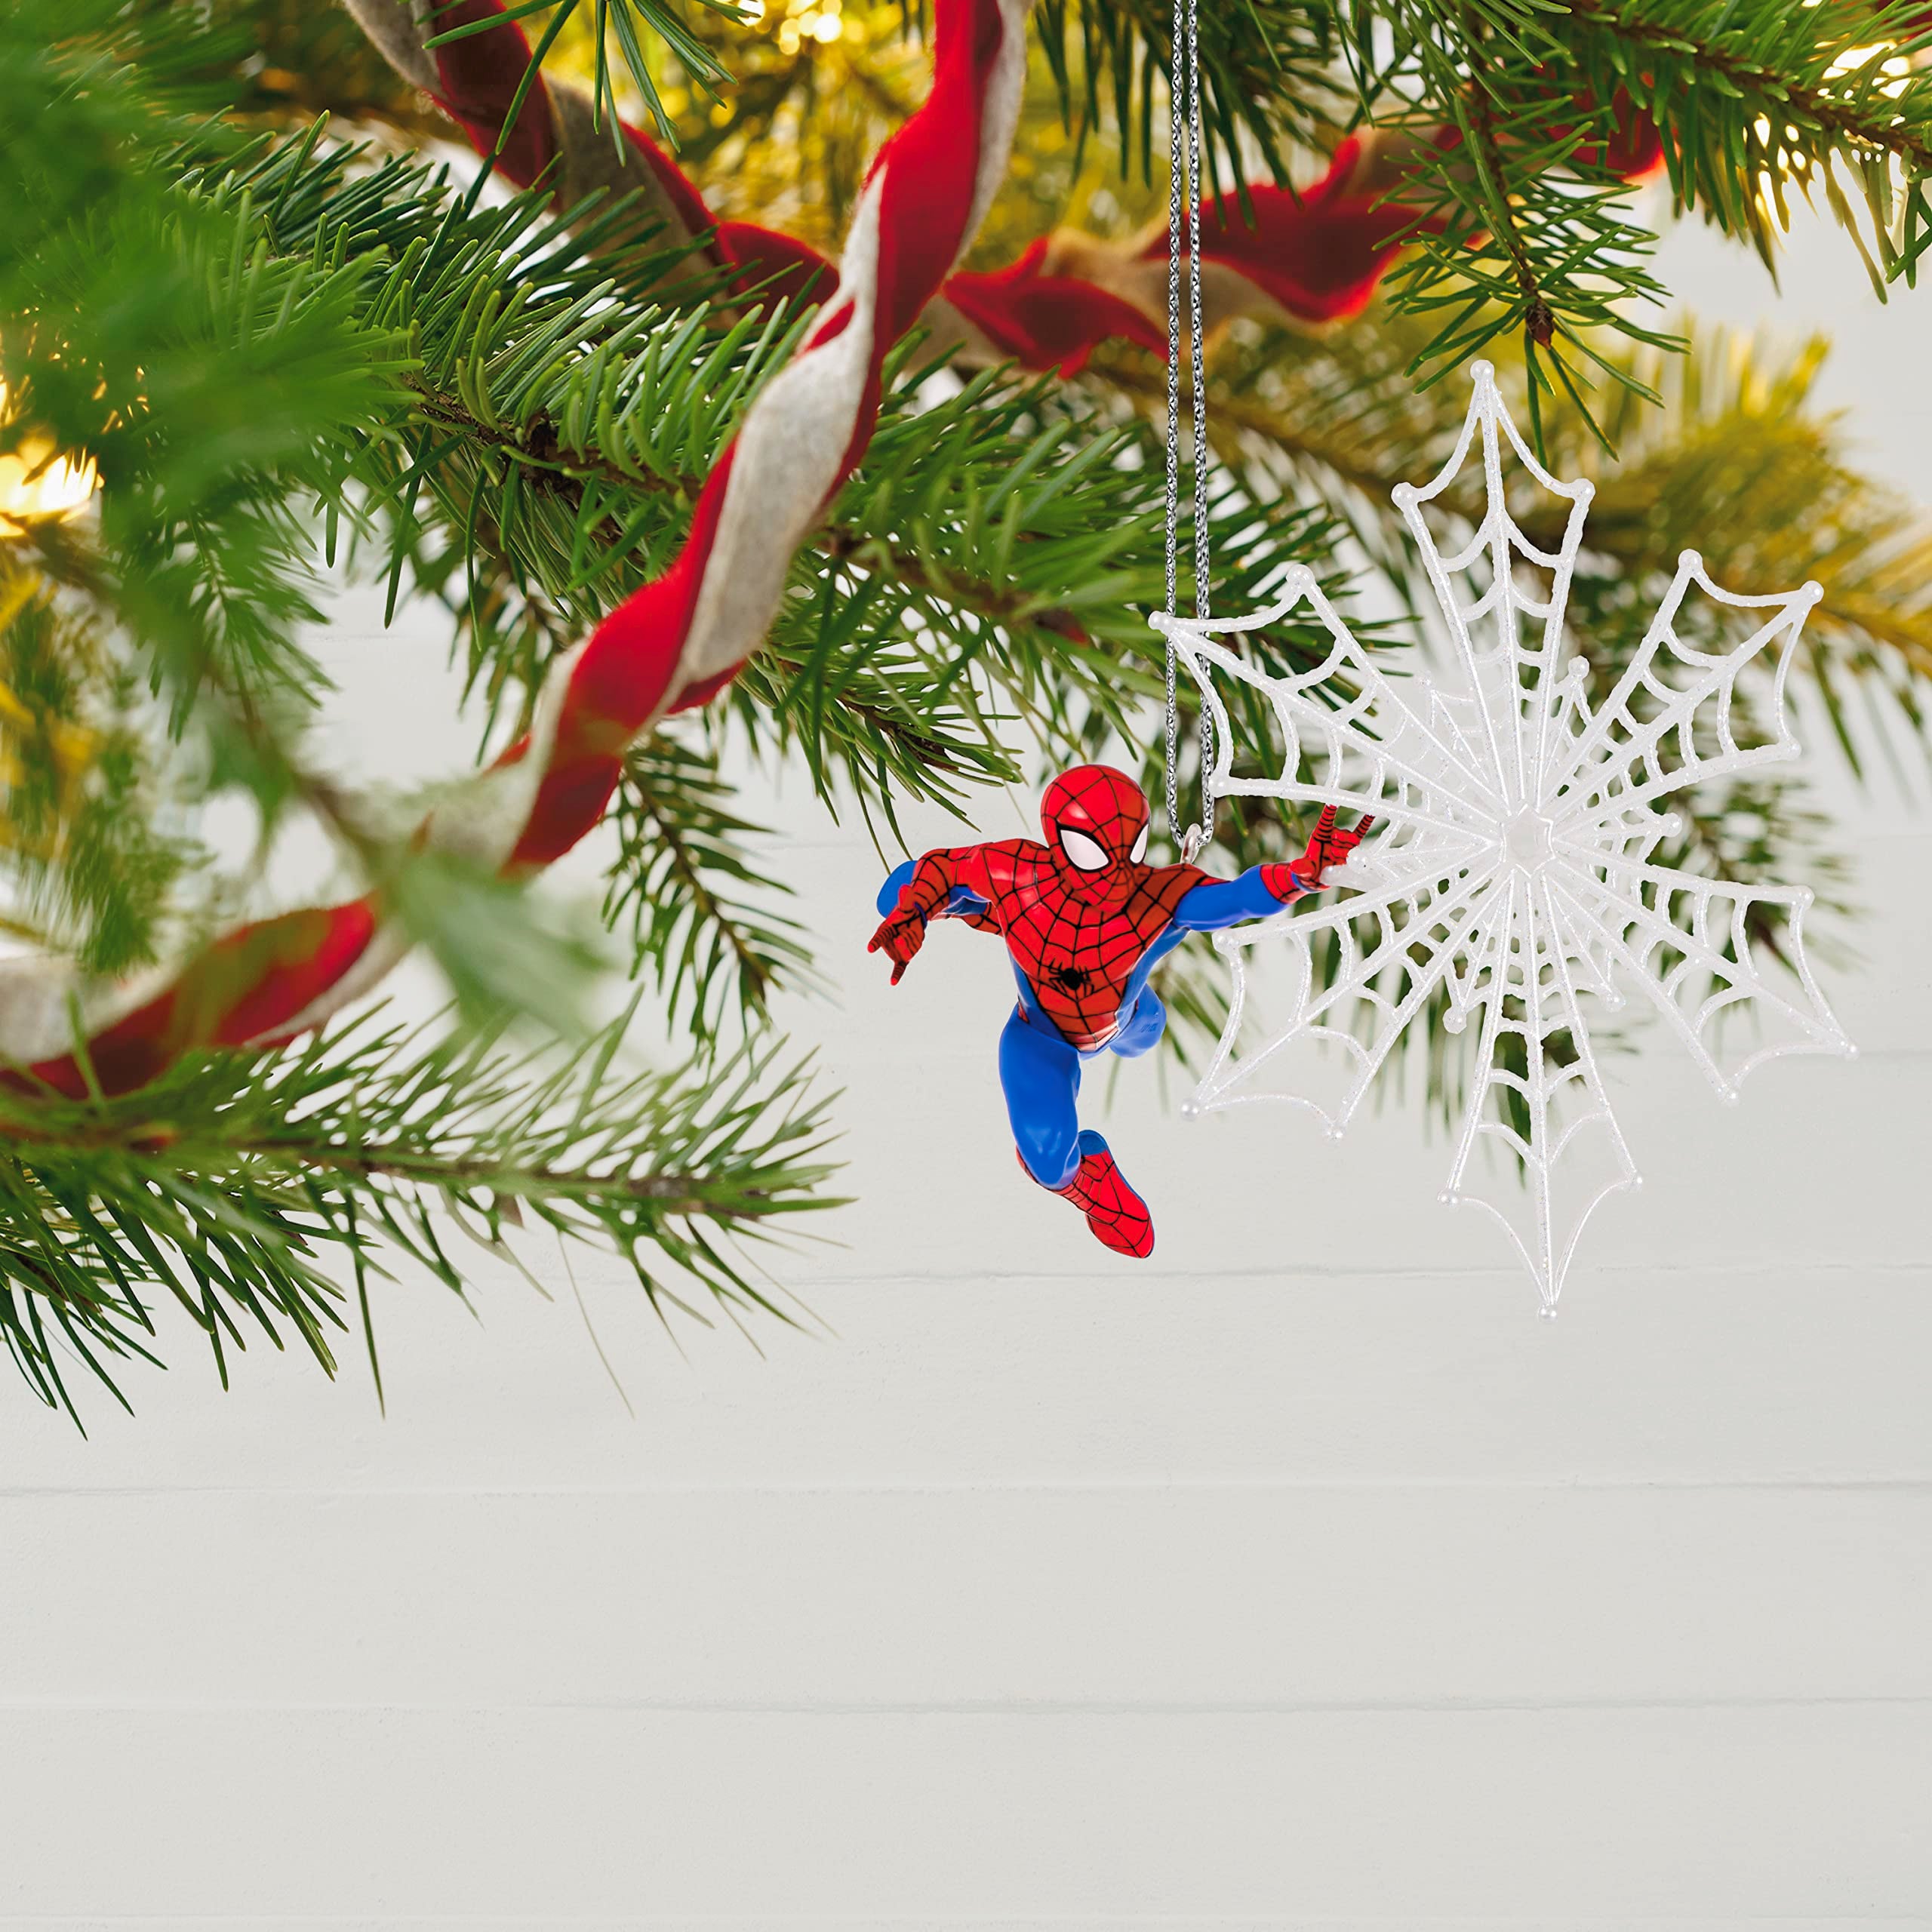 Hallmark Keepsake Christmas Ornament 2023, Marvel Spider-Man Spidey Spins a Snowflake, Super Hero Gifts